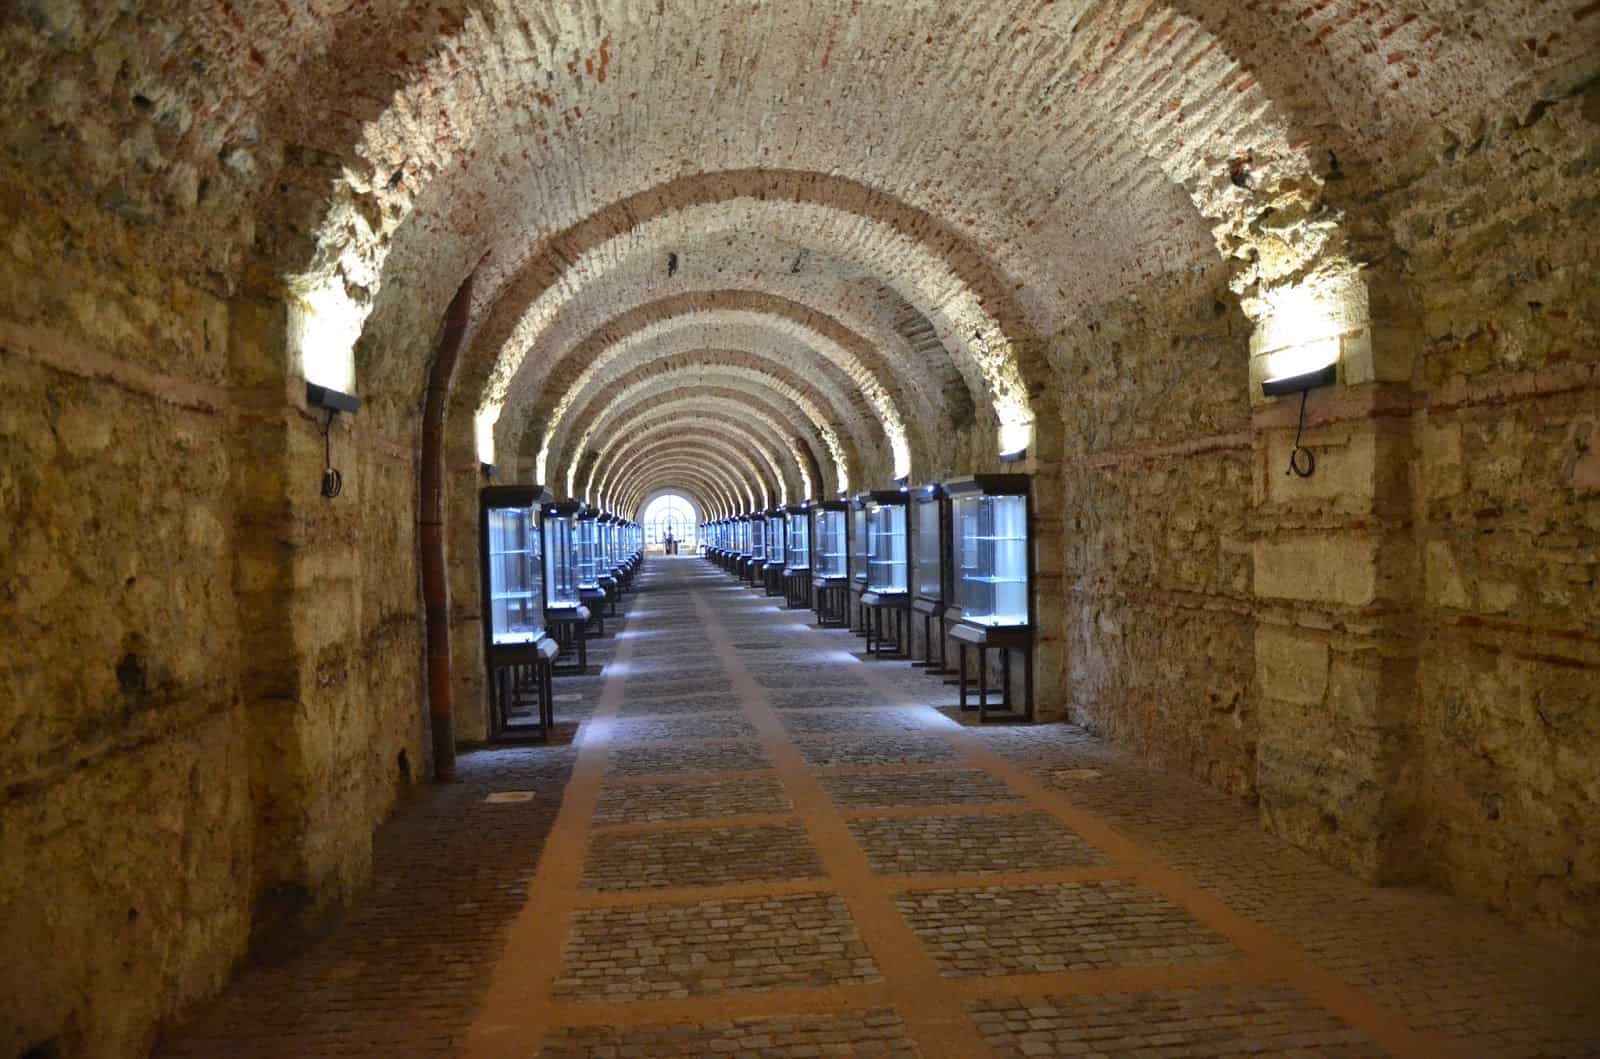 Tunnel to Beylerbeyi Palace in Beylerbeyi, Istanbul, Turkey